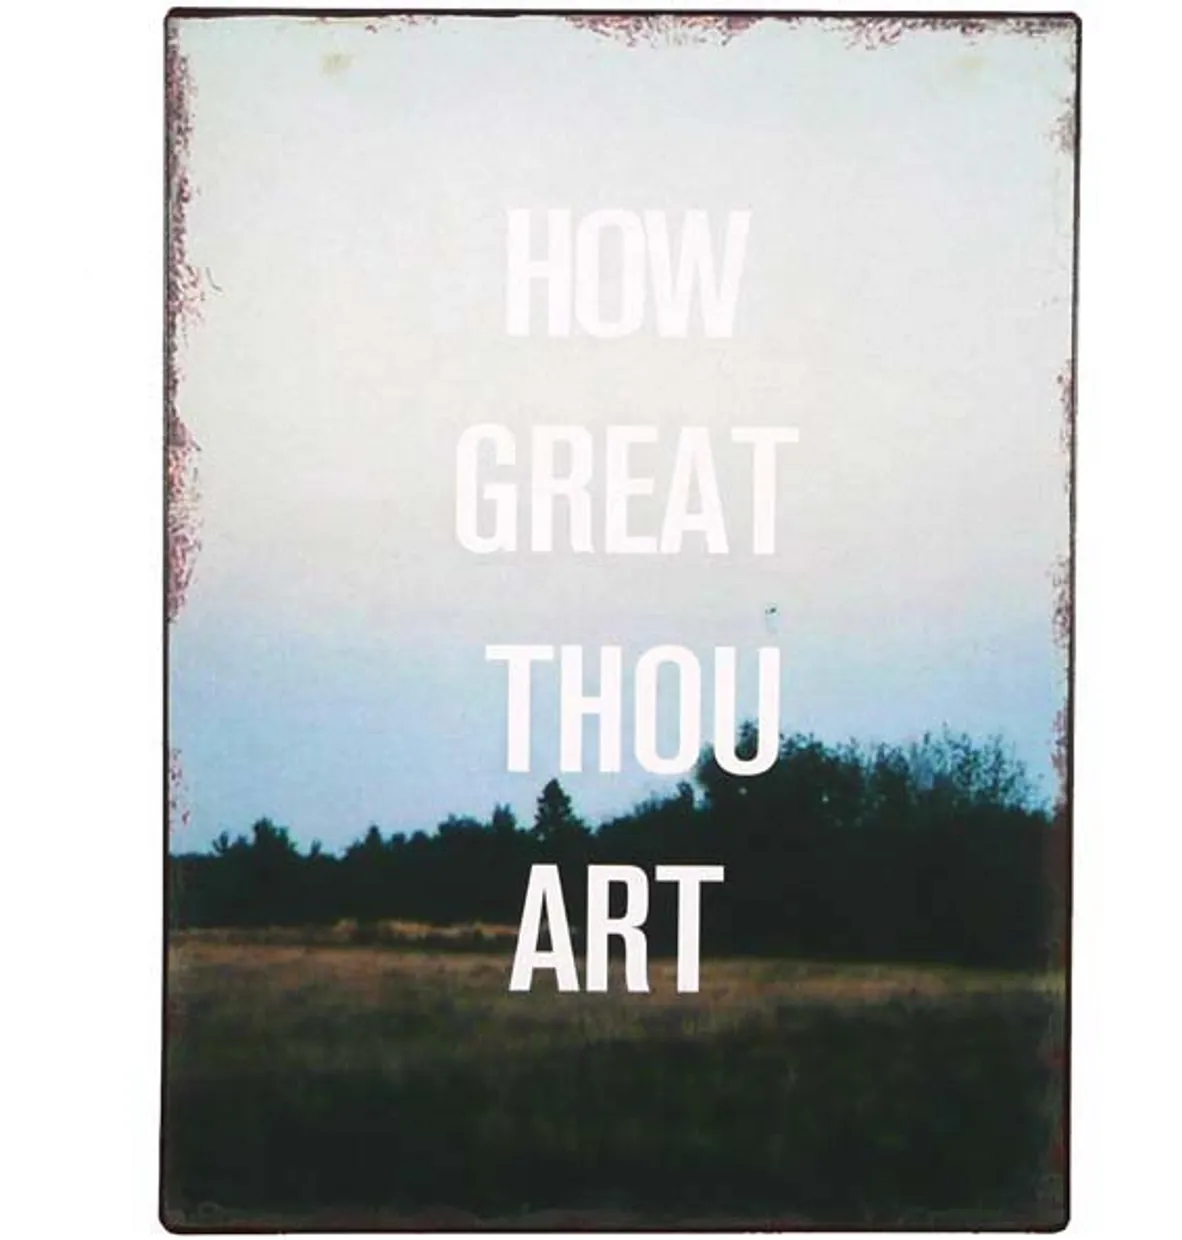 Tekstbord: "How great thou art"